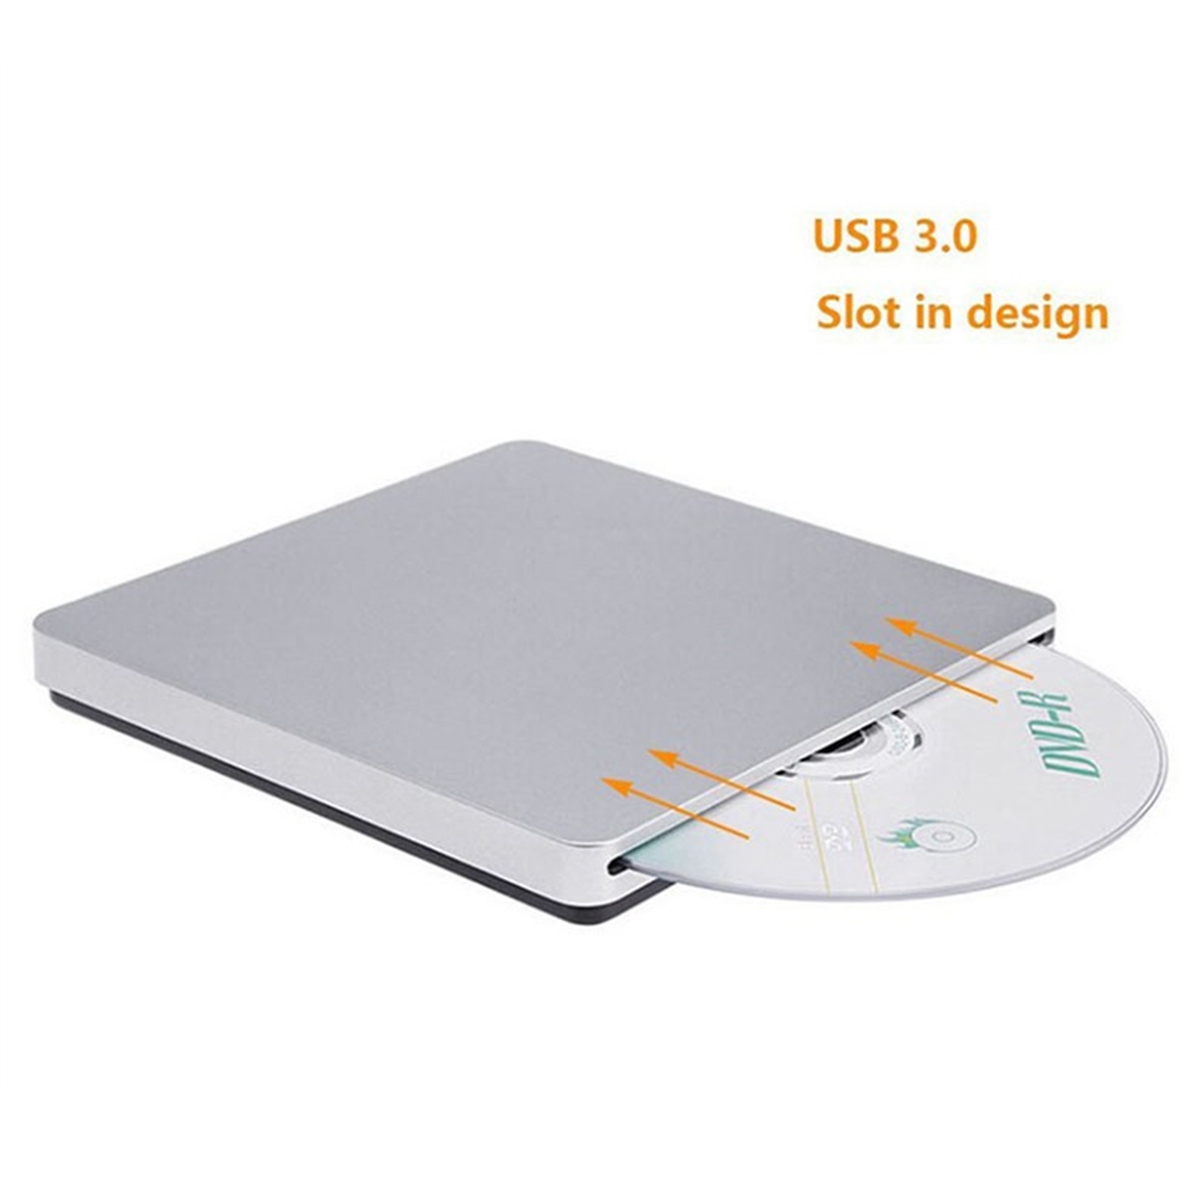 Slim-USB-External-CD-Burner-Reader-Player-CD--DVD-Player-Optical-Drive-for-PC-Laptop-Windows-1762678-3